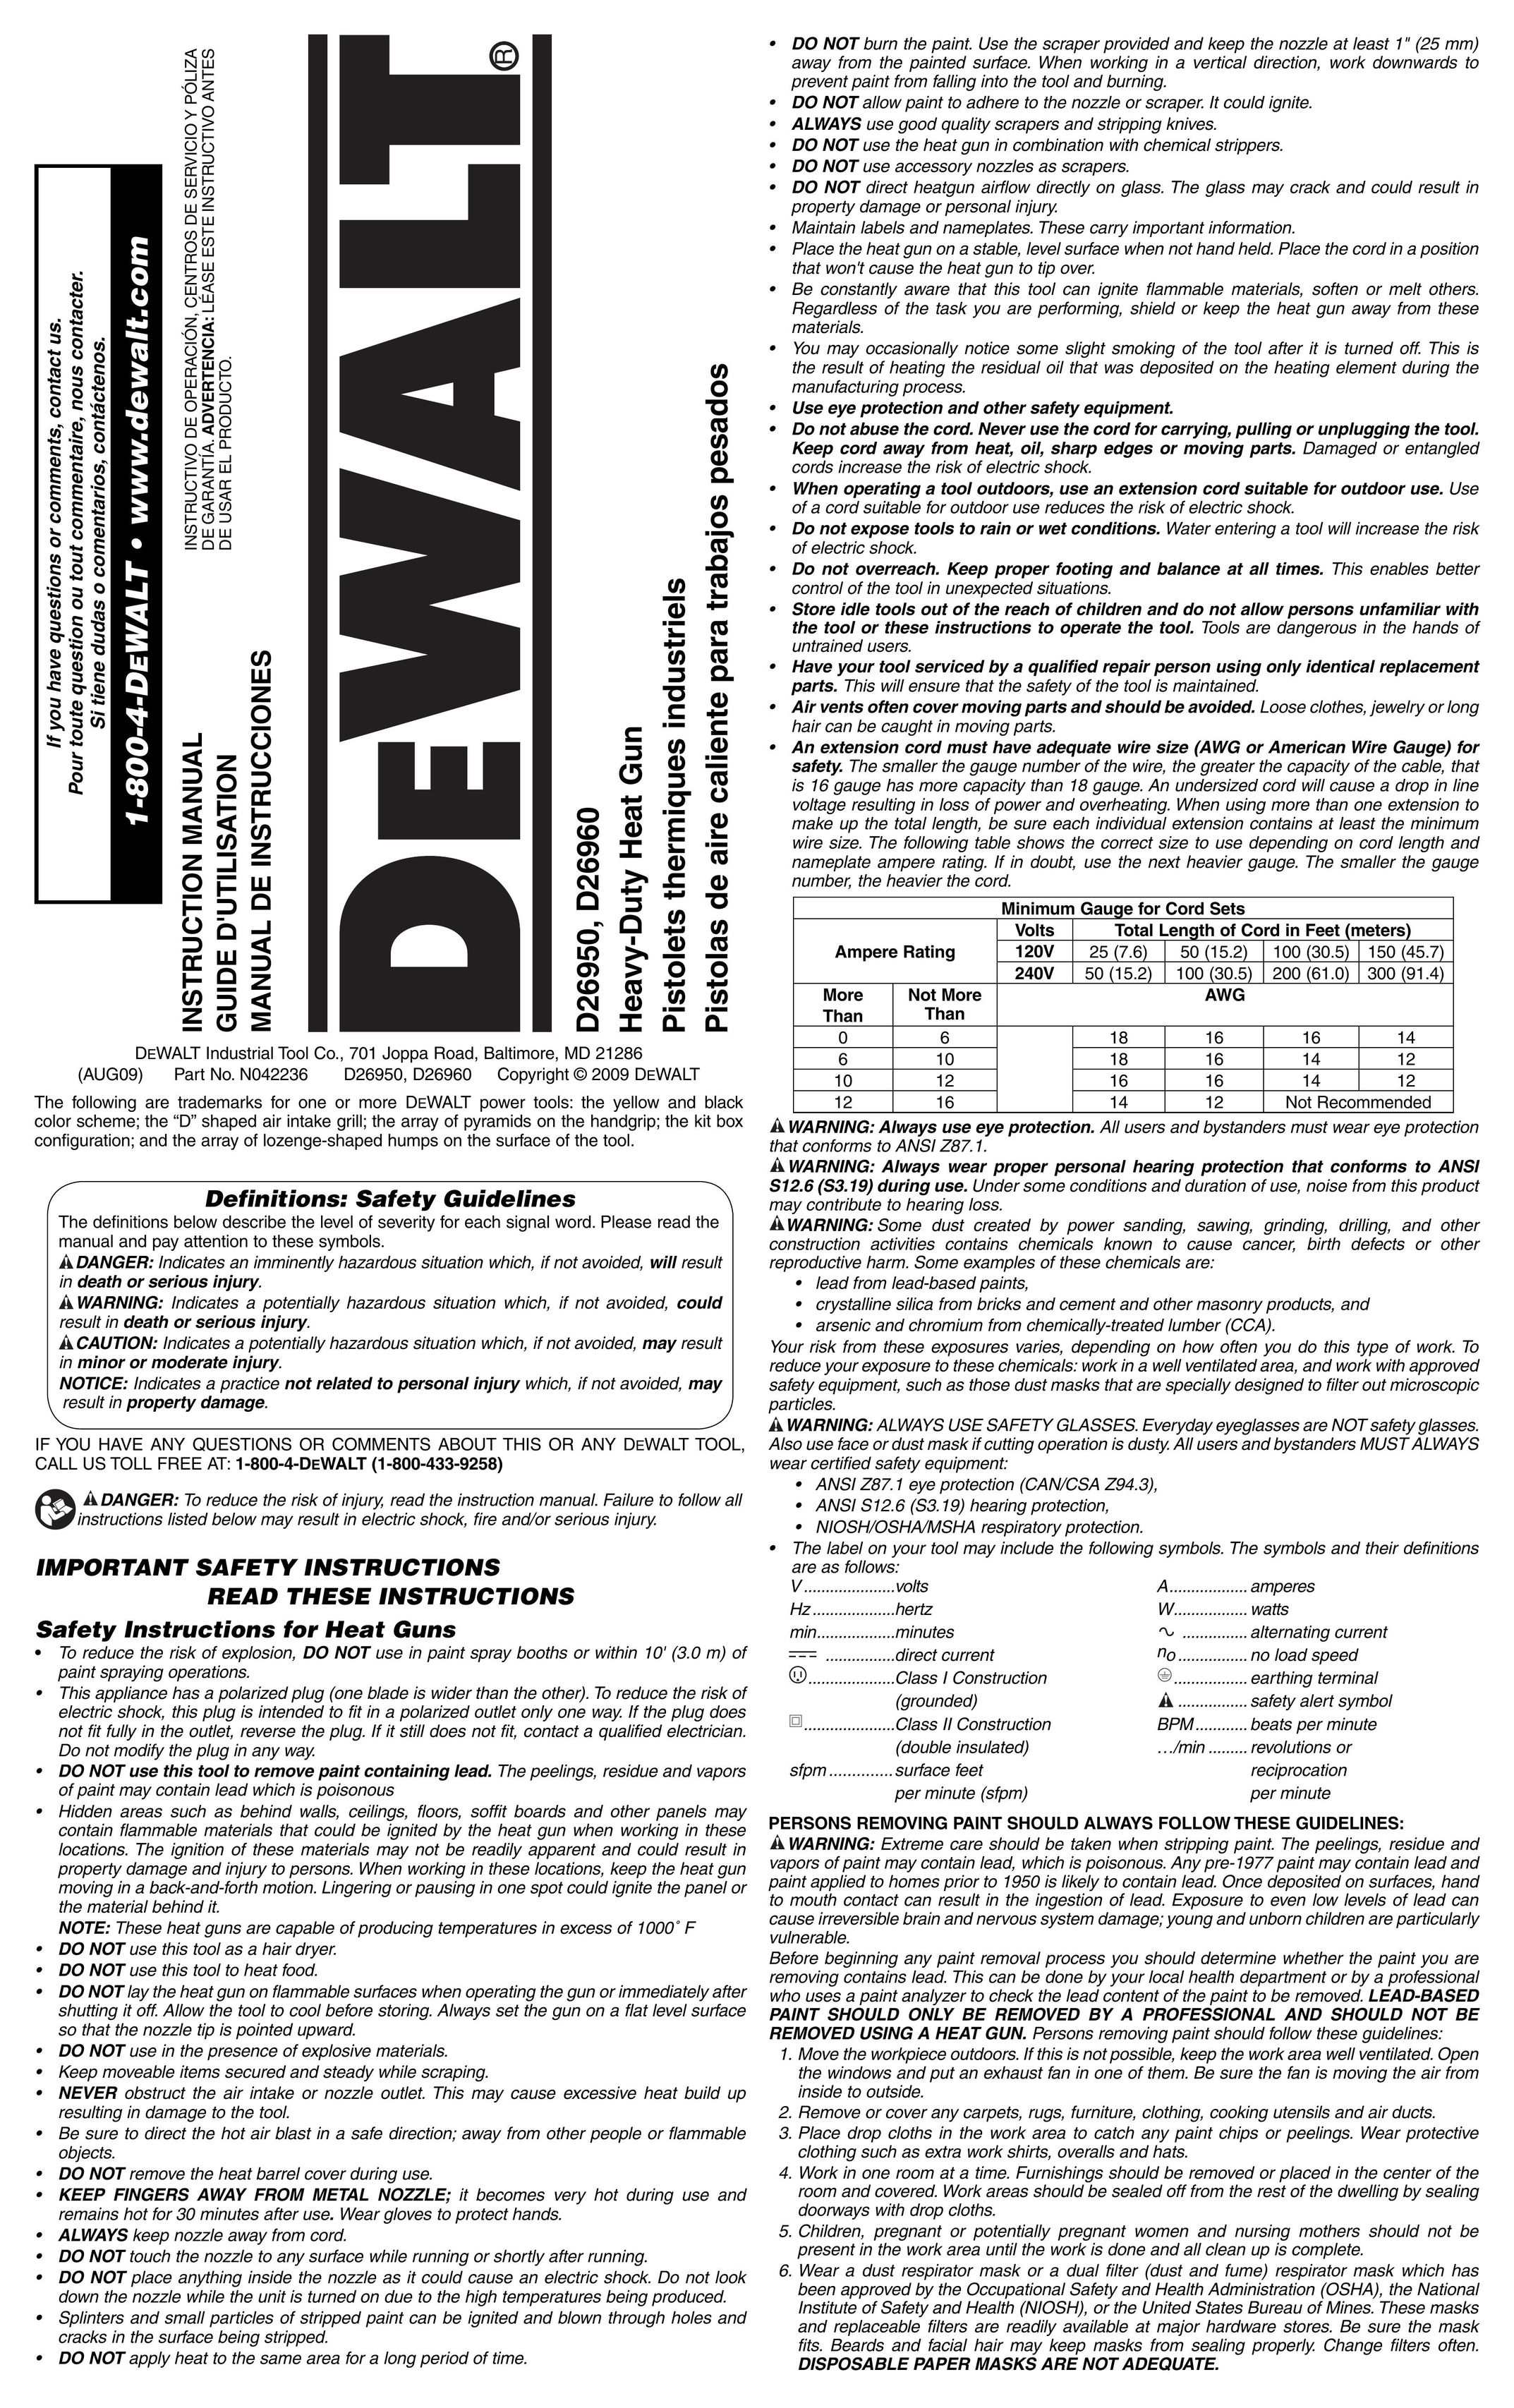 DeWalt D26960K Electric Heater User Manual